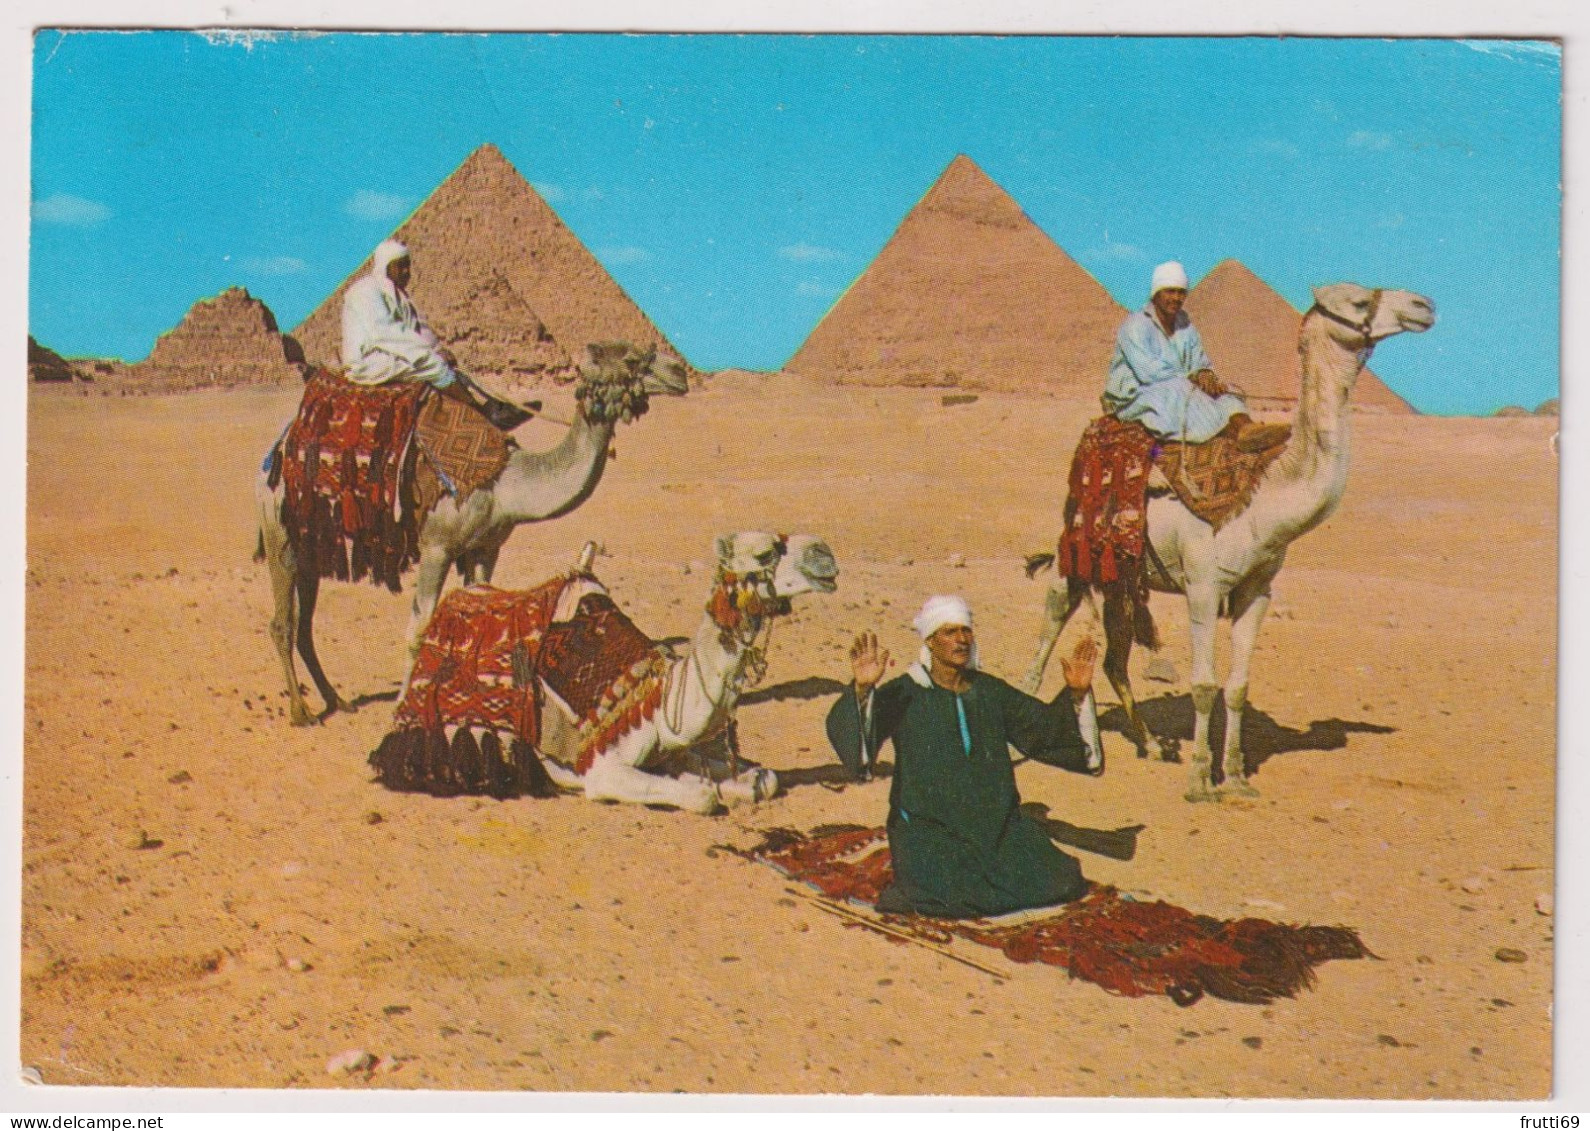 AK 198200  EGYPT - Giza - Kheops, Kephren And Mycerinos Pyramids - Pyramiden